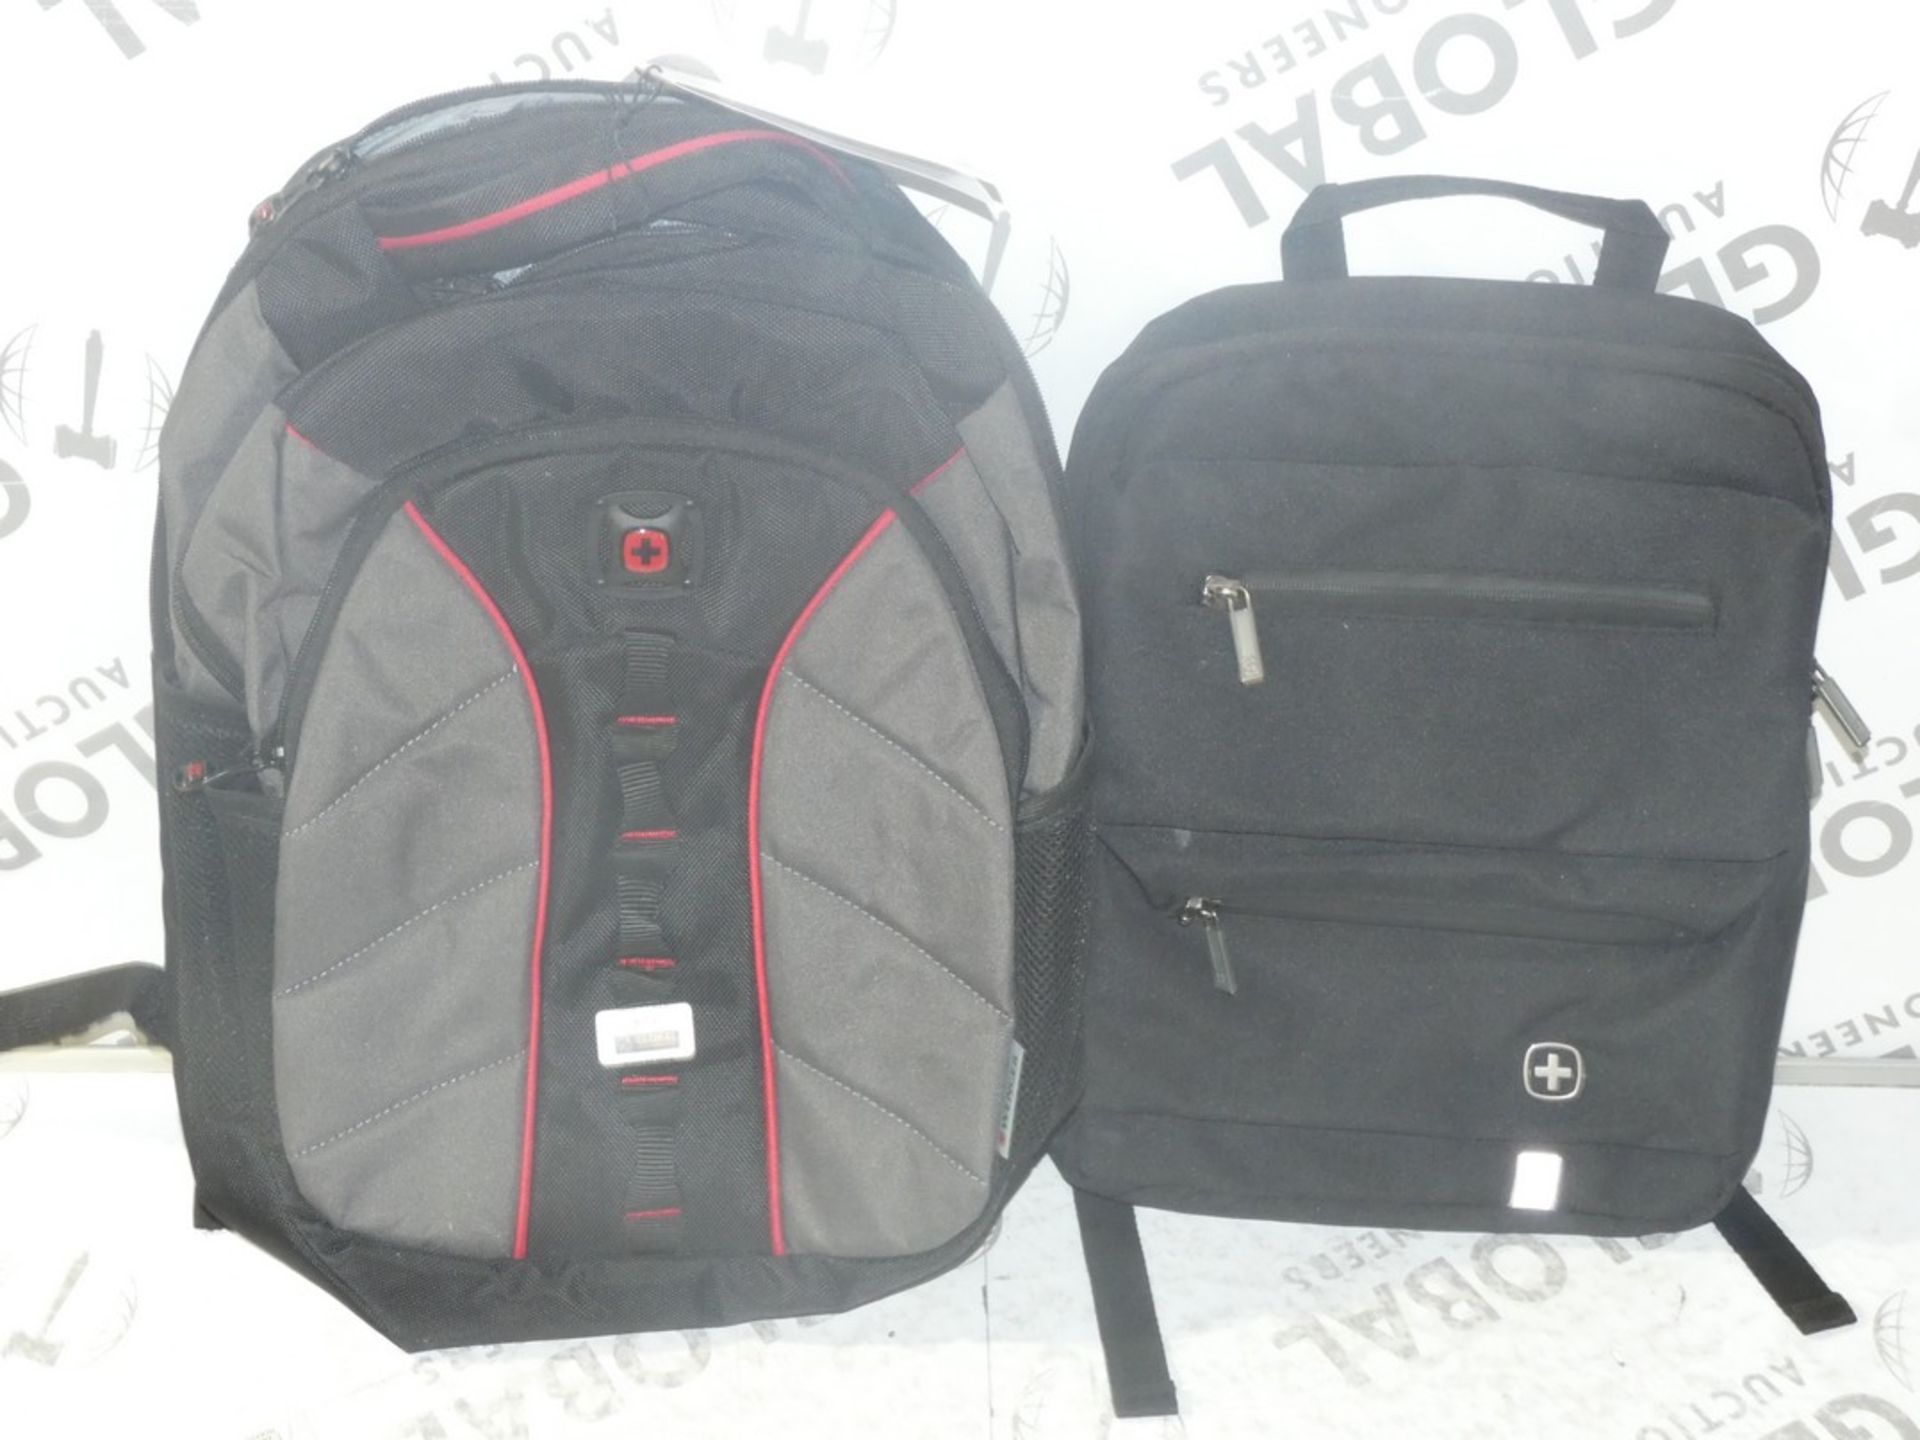 Wenga Rucksack Bags In Black, Grey and Red RRP£50each